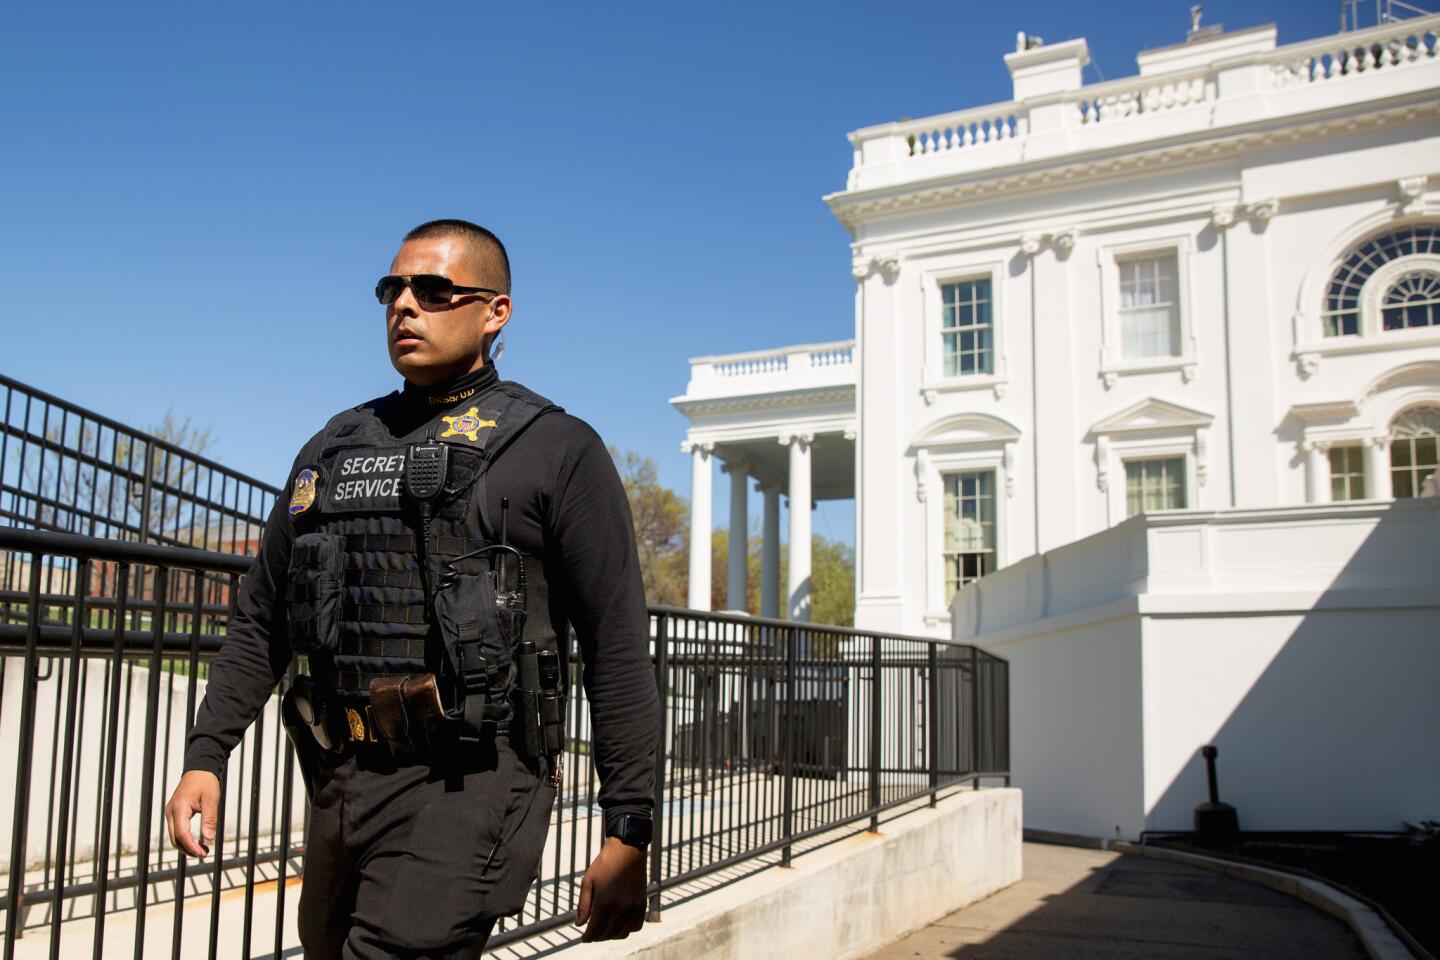 Capitol, White House on lockdown